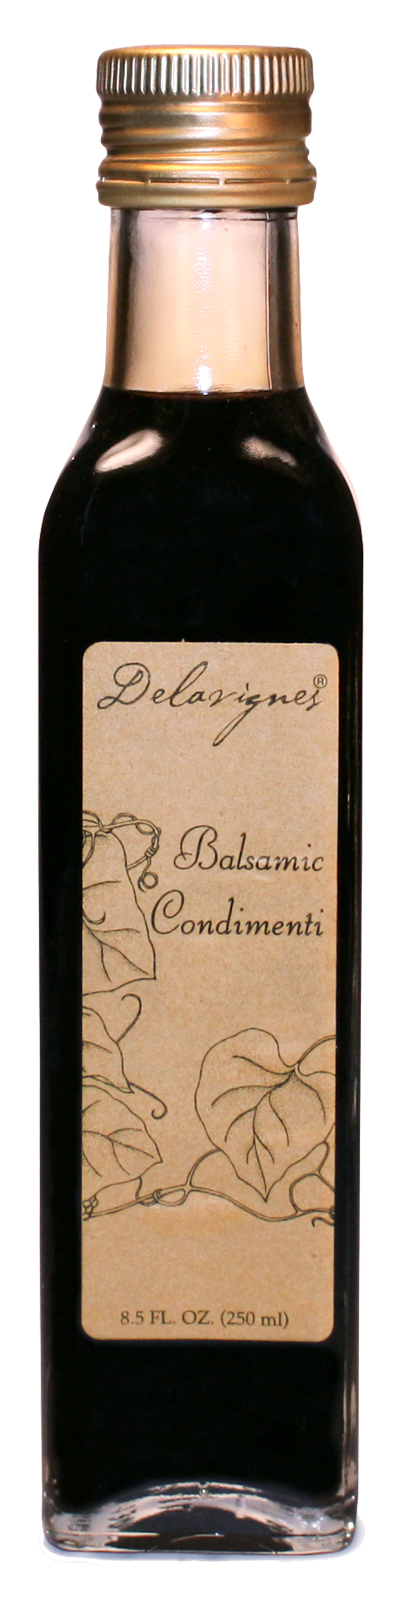 Olive Oil Factory Balsamic Condimenti